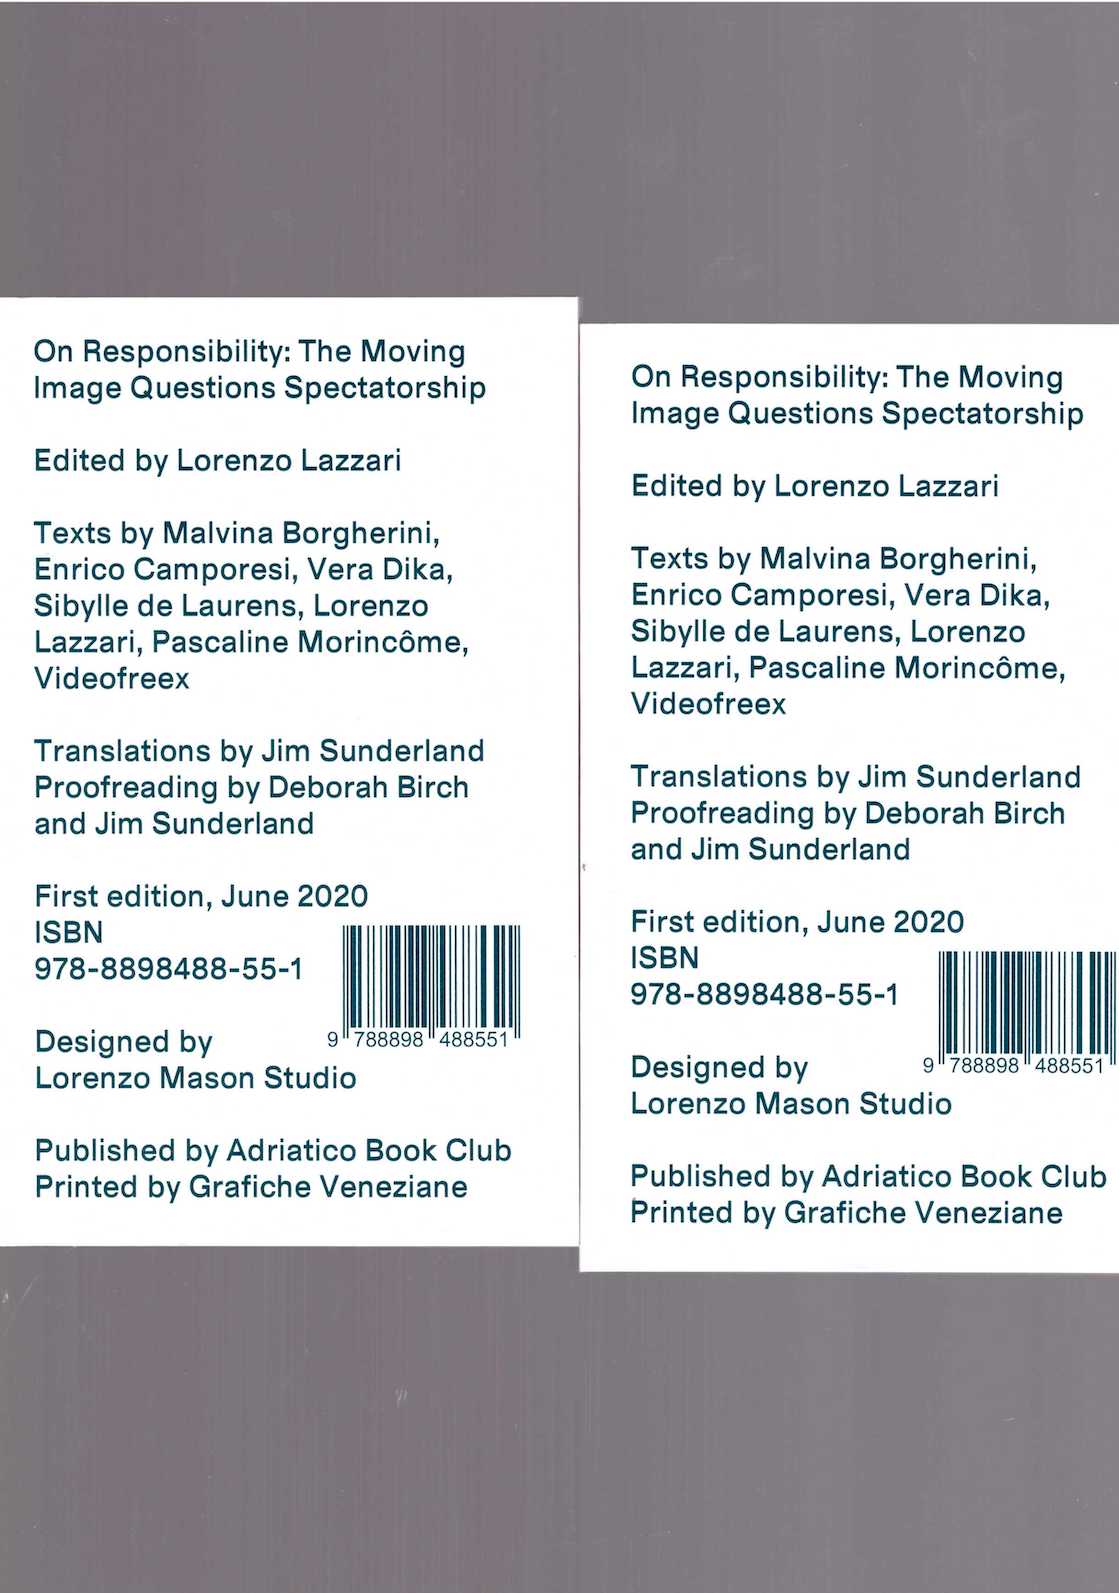 LAZZARI, Lorenzo (ed.) - On Responsibility: The Moving Image Questions Spectatorship